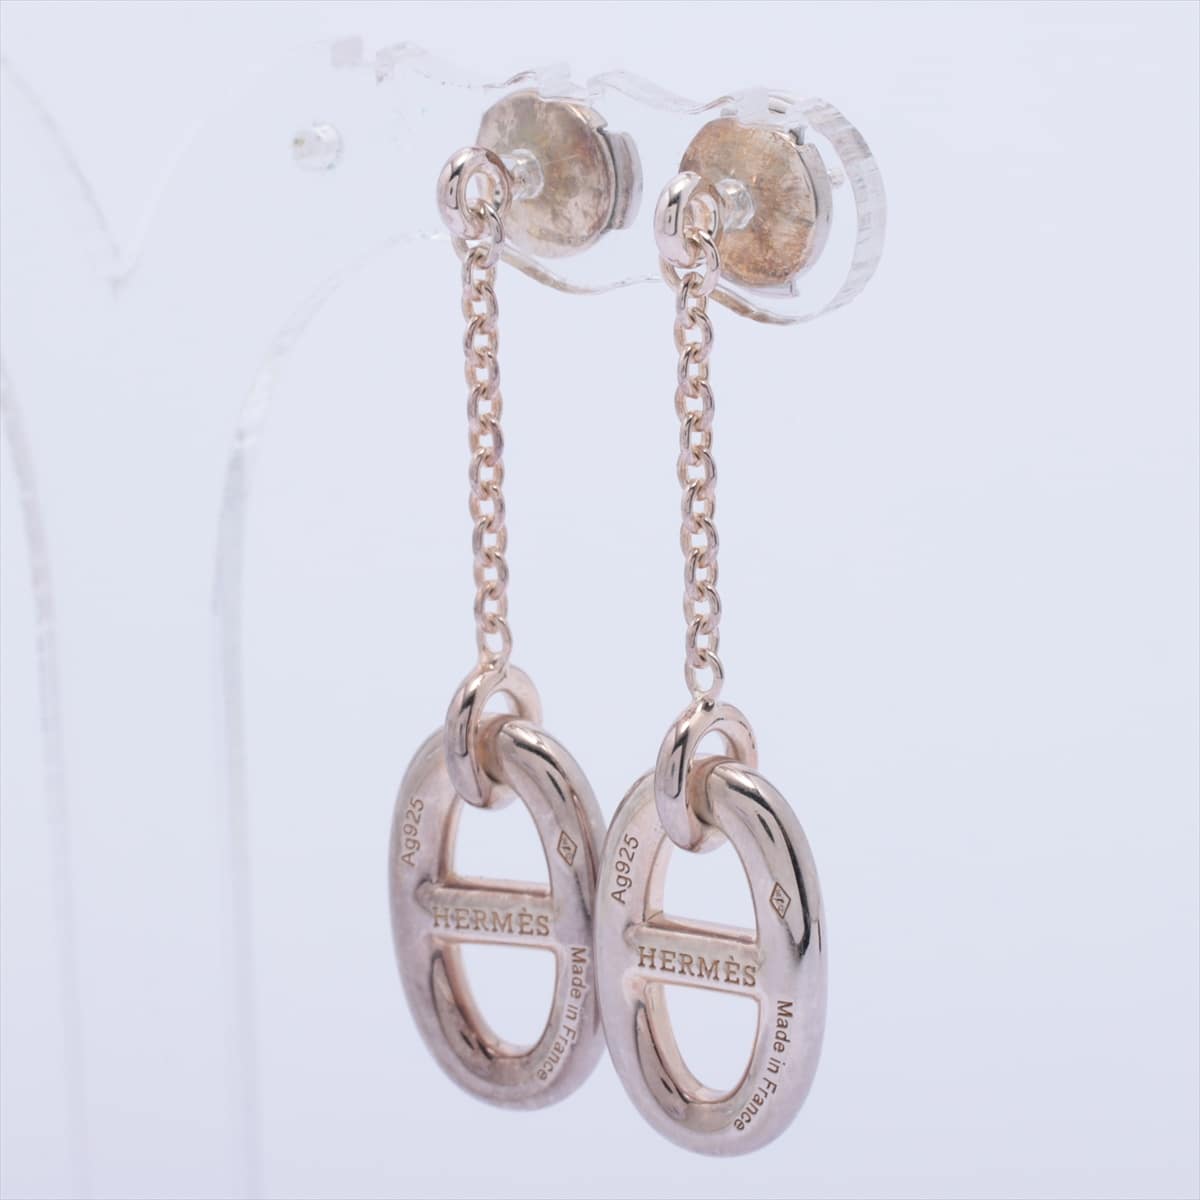 Hermès Chaîne d'Ancre Farandole Piercing jewelry (for both ears) 925 6.6g Silver